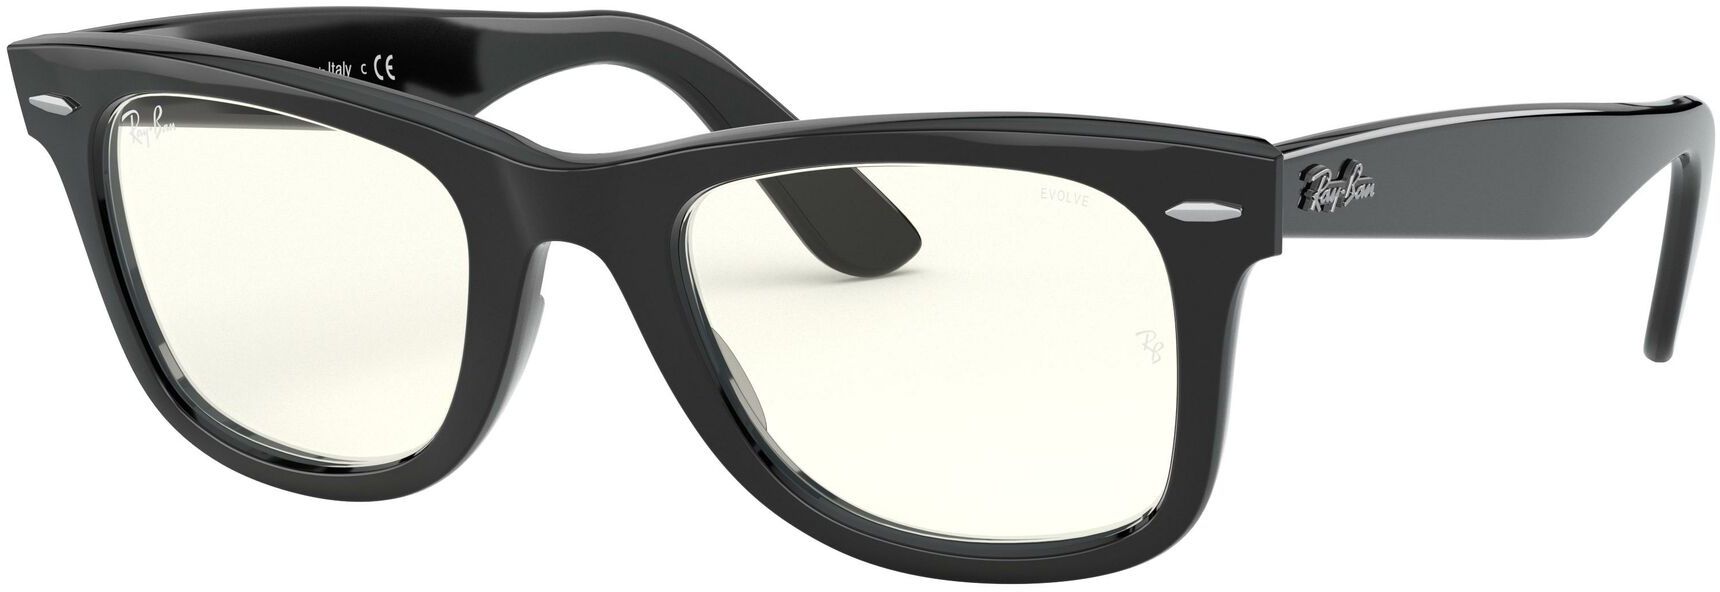 Photos - Sunglasses Ray-Ban Wayfarer Evolve Glasses, Men's, Medium, Black/Gray 20RYBURB2140CLR 